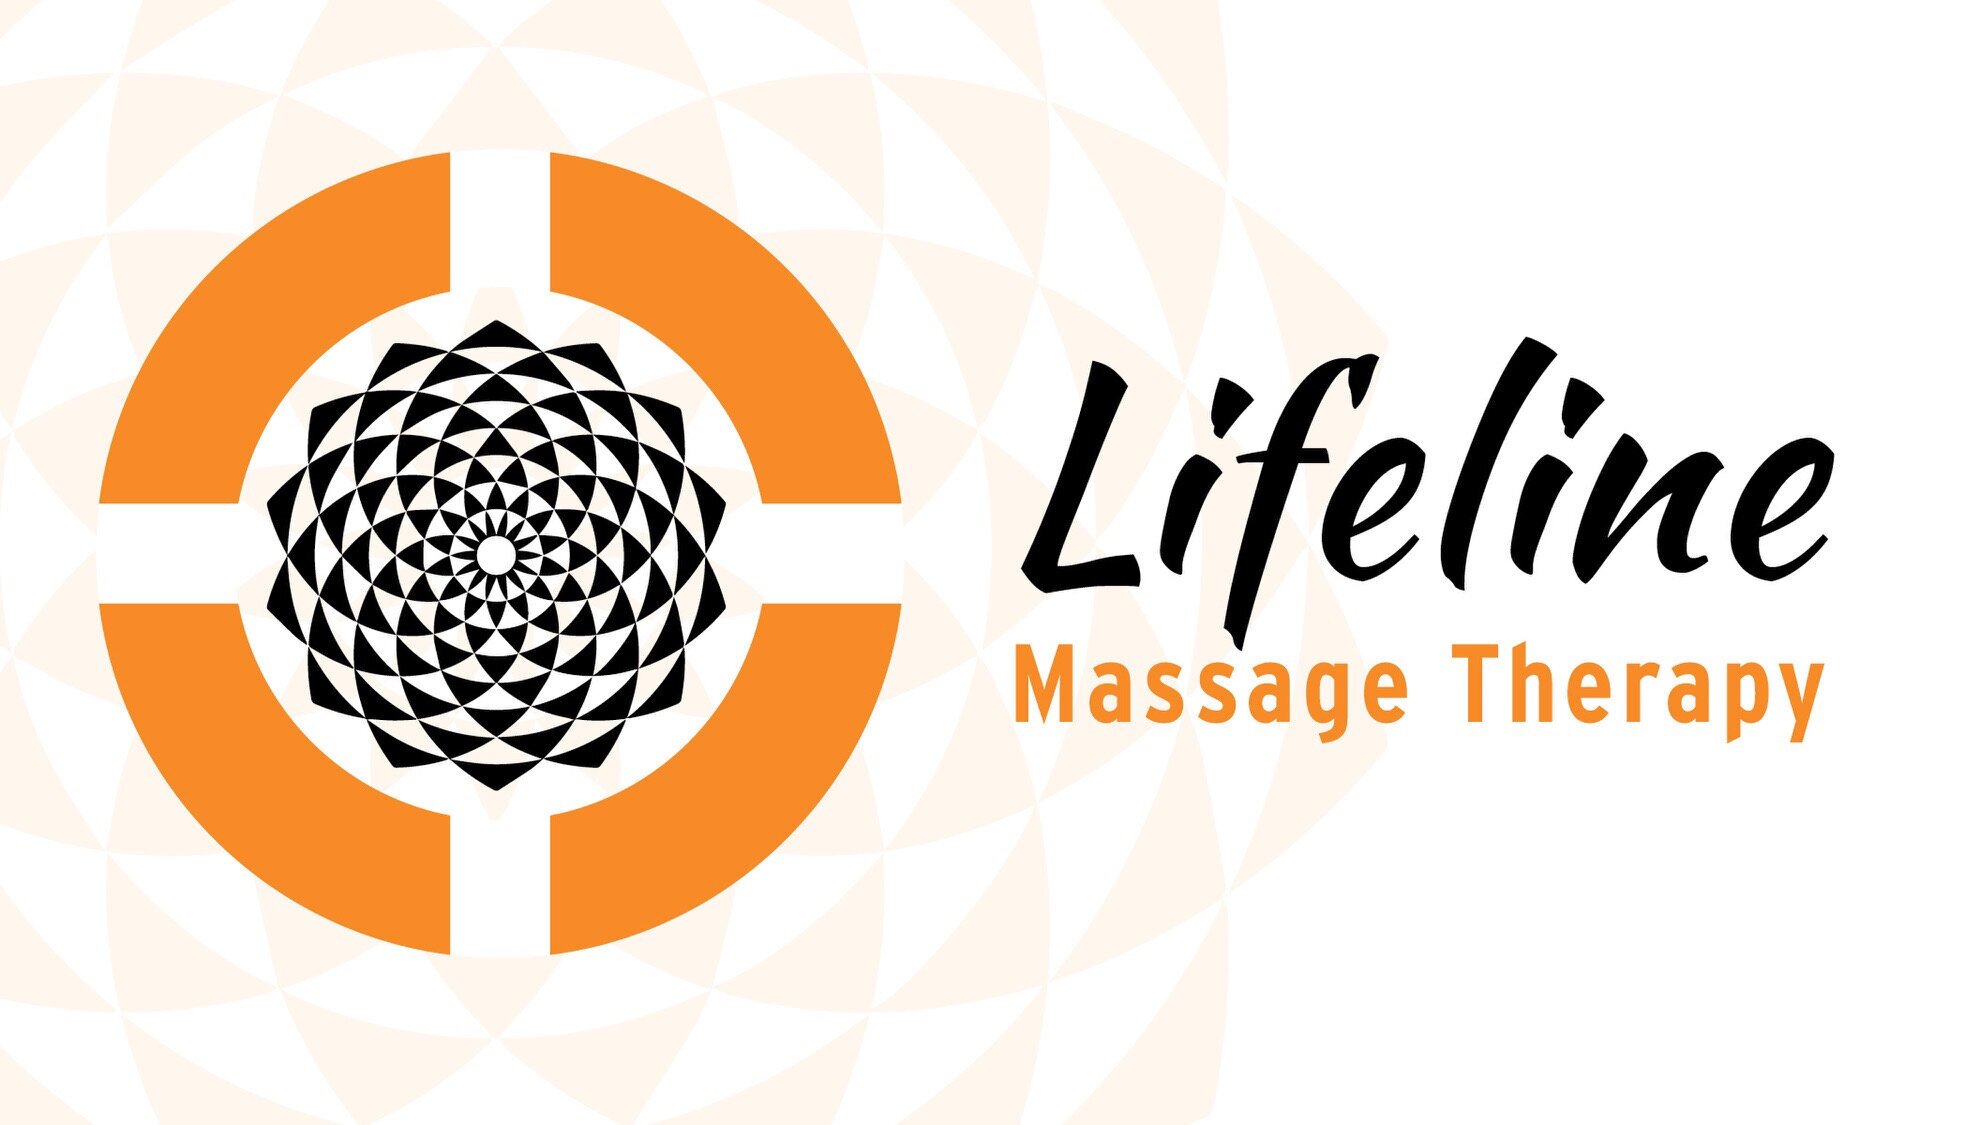 Lifeline Massage Therapy